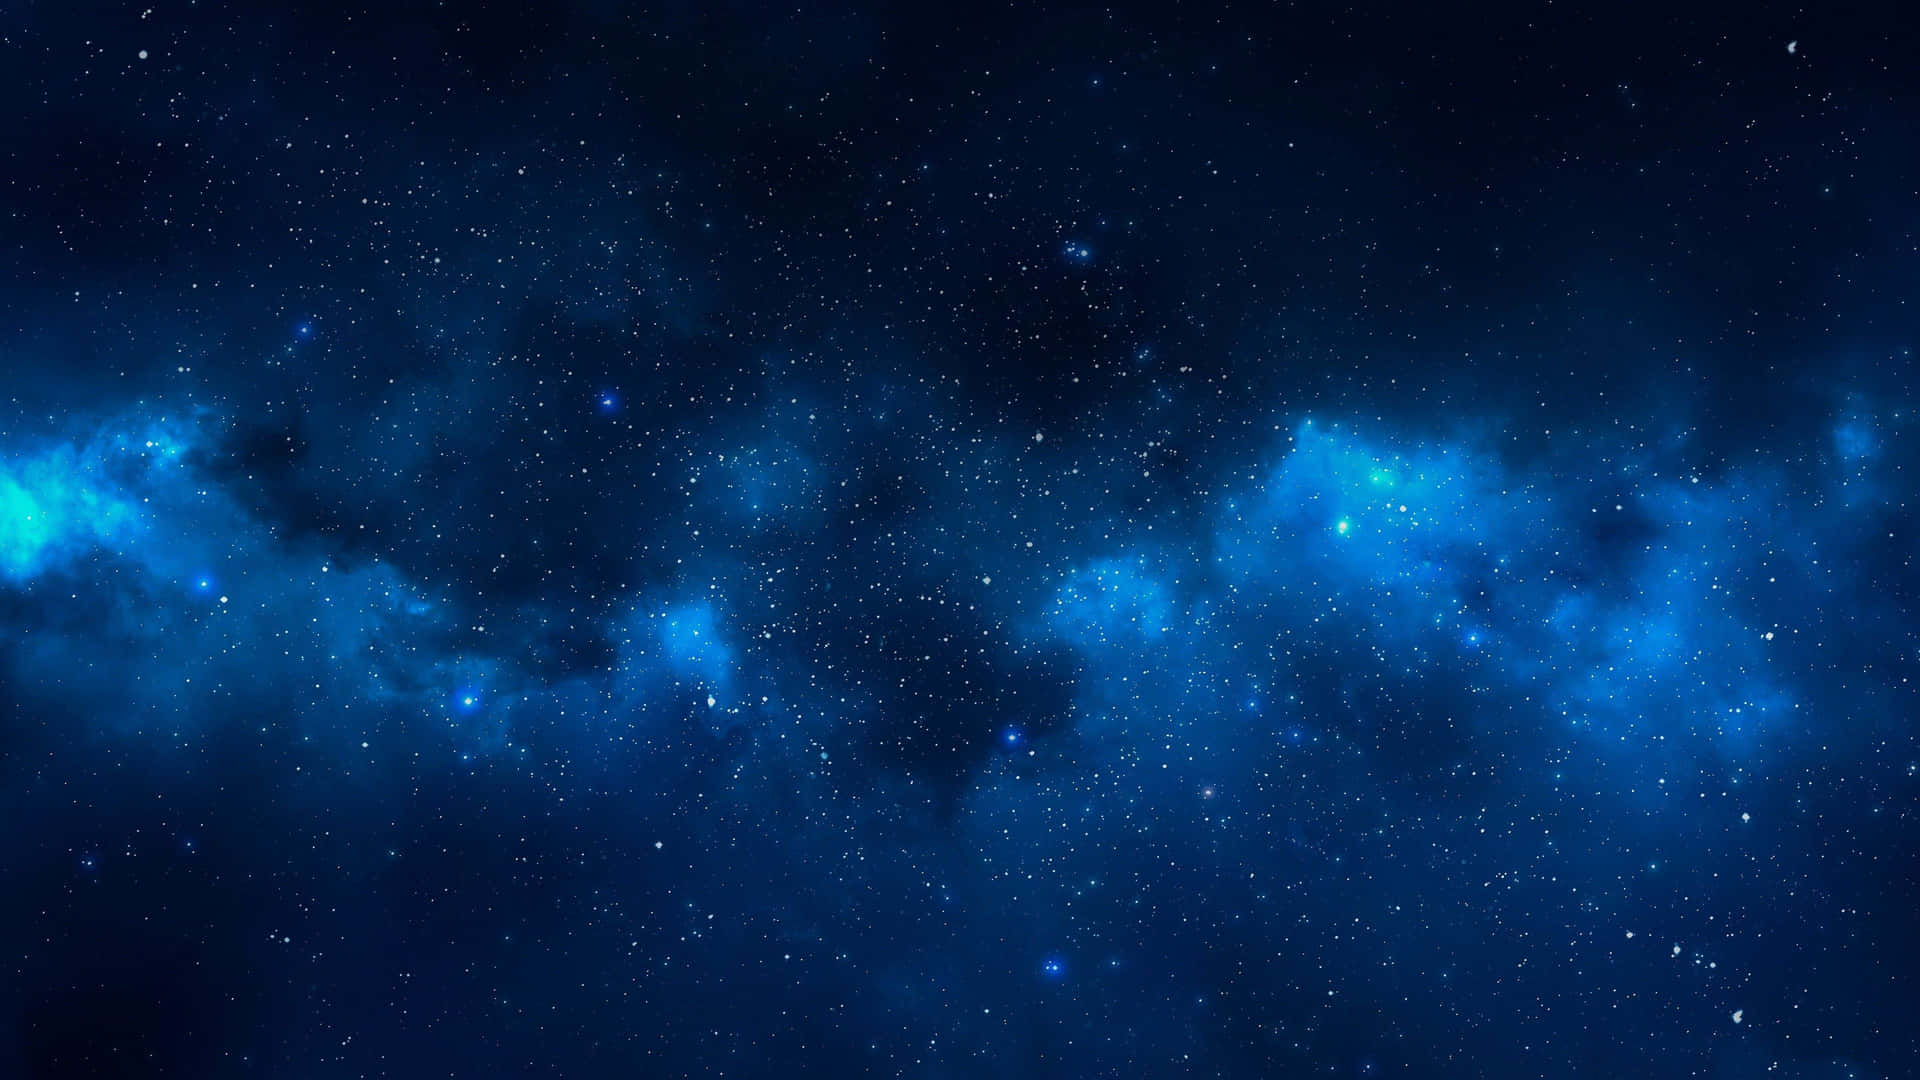 Image  "Cosmic Breathtaking View of a Nebula"